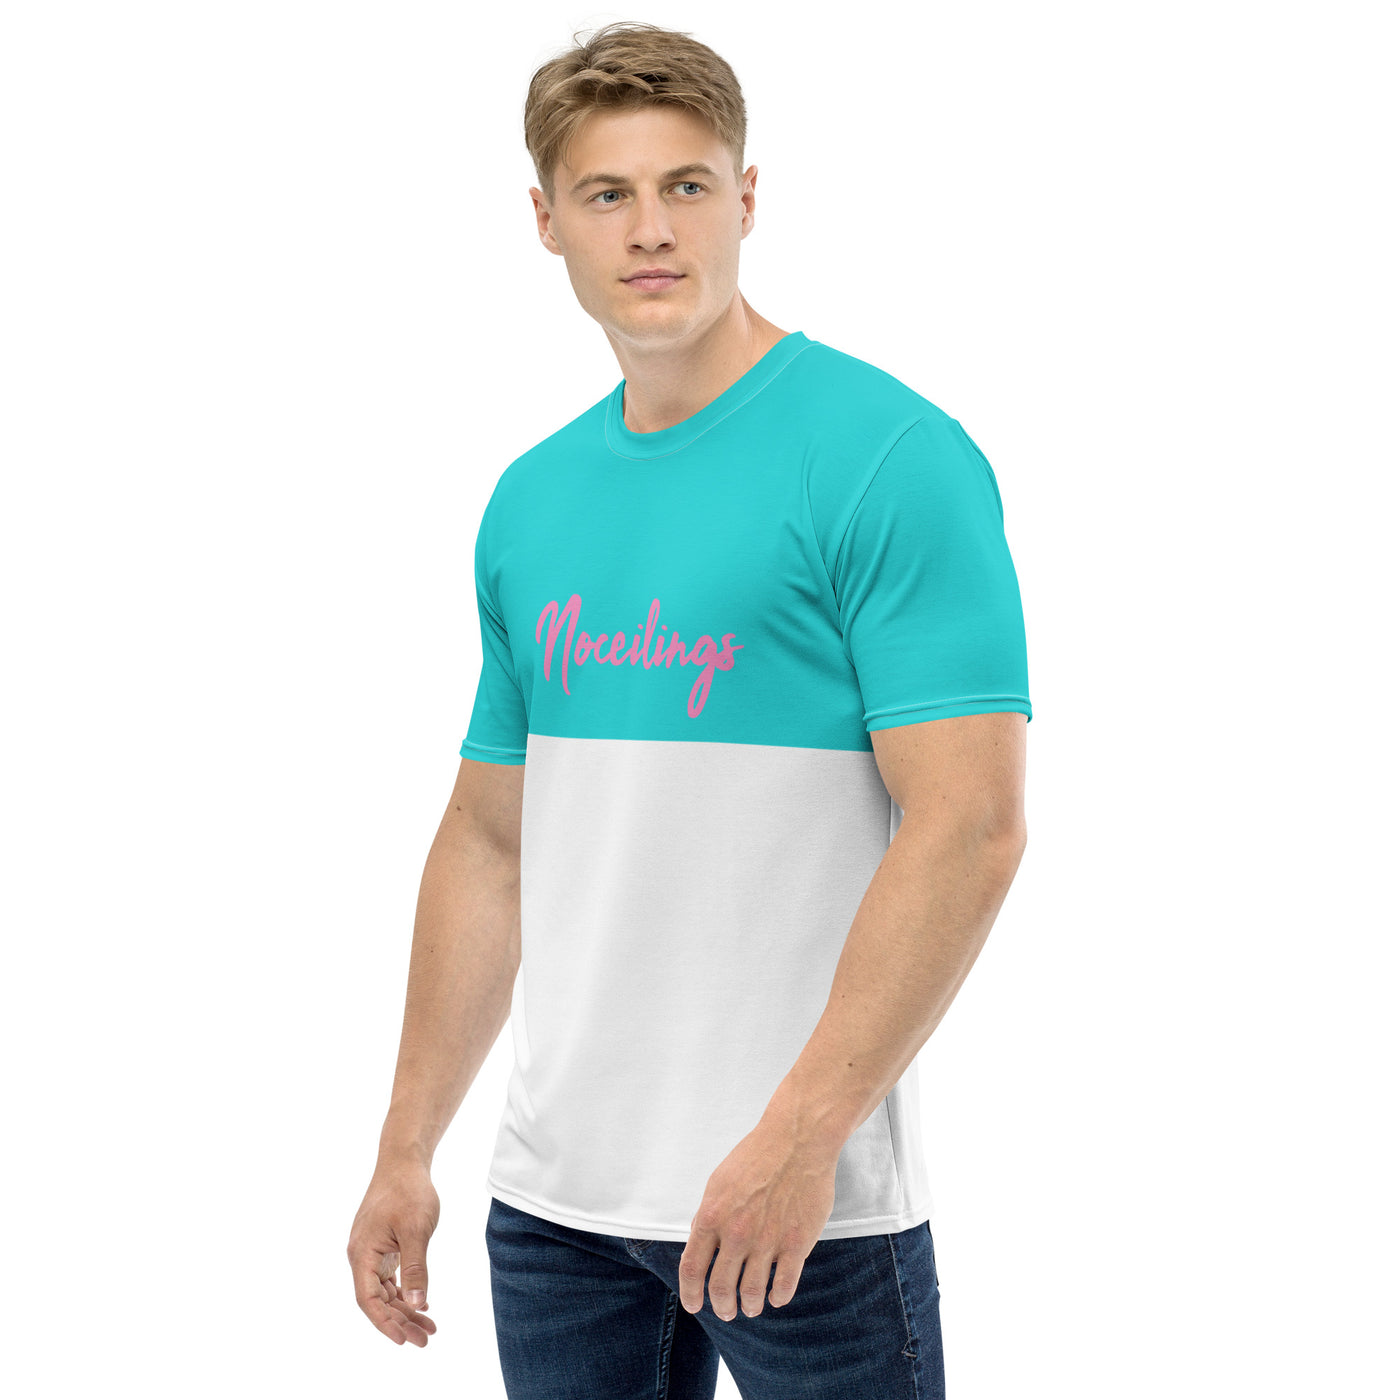 South Beach Noceilings Men's t-shirt